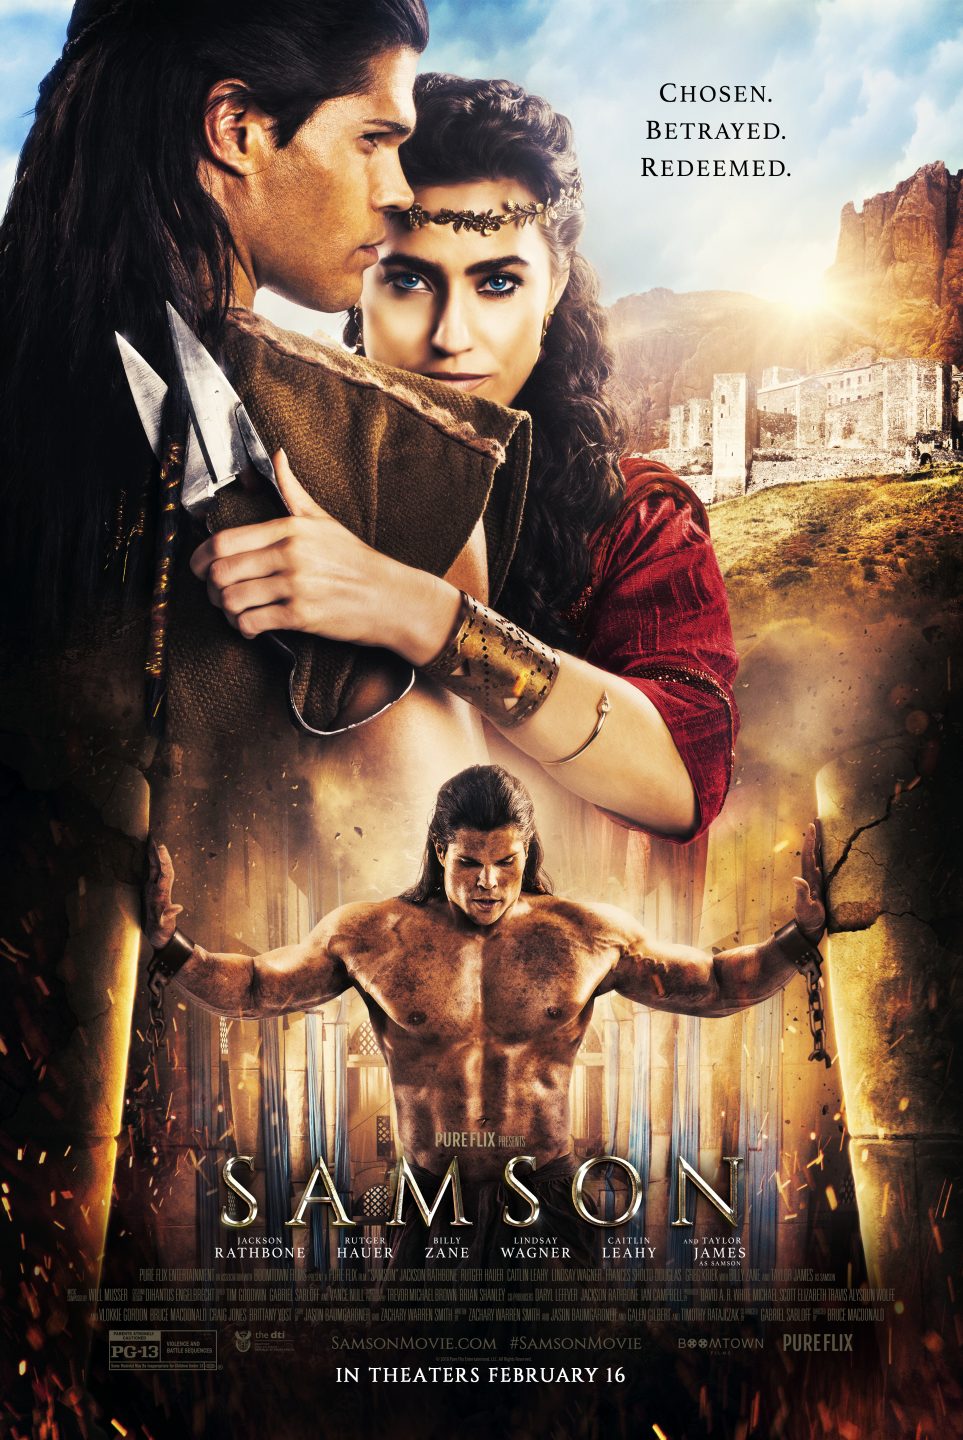 Samson poster (Pure Flix)